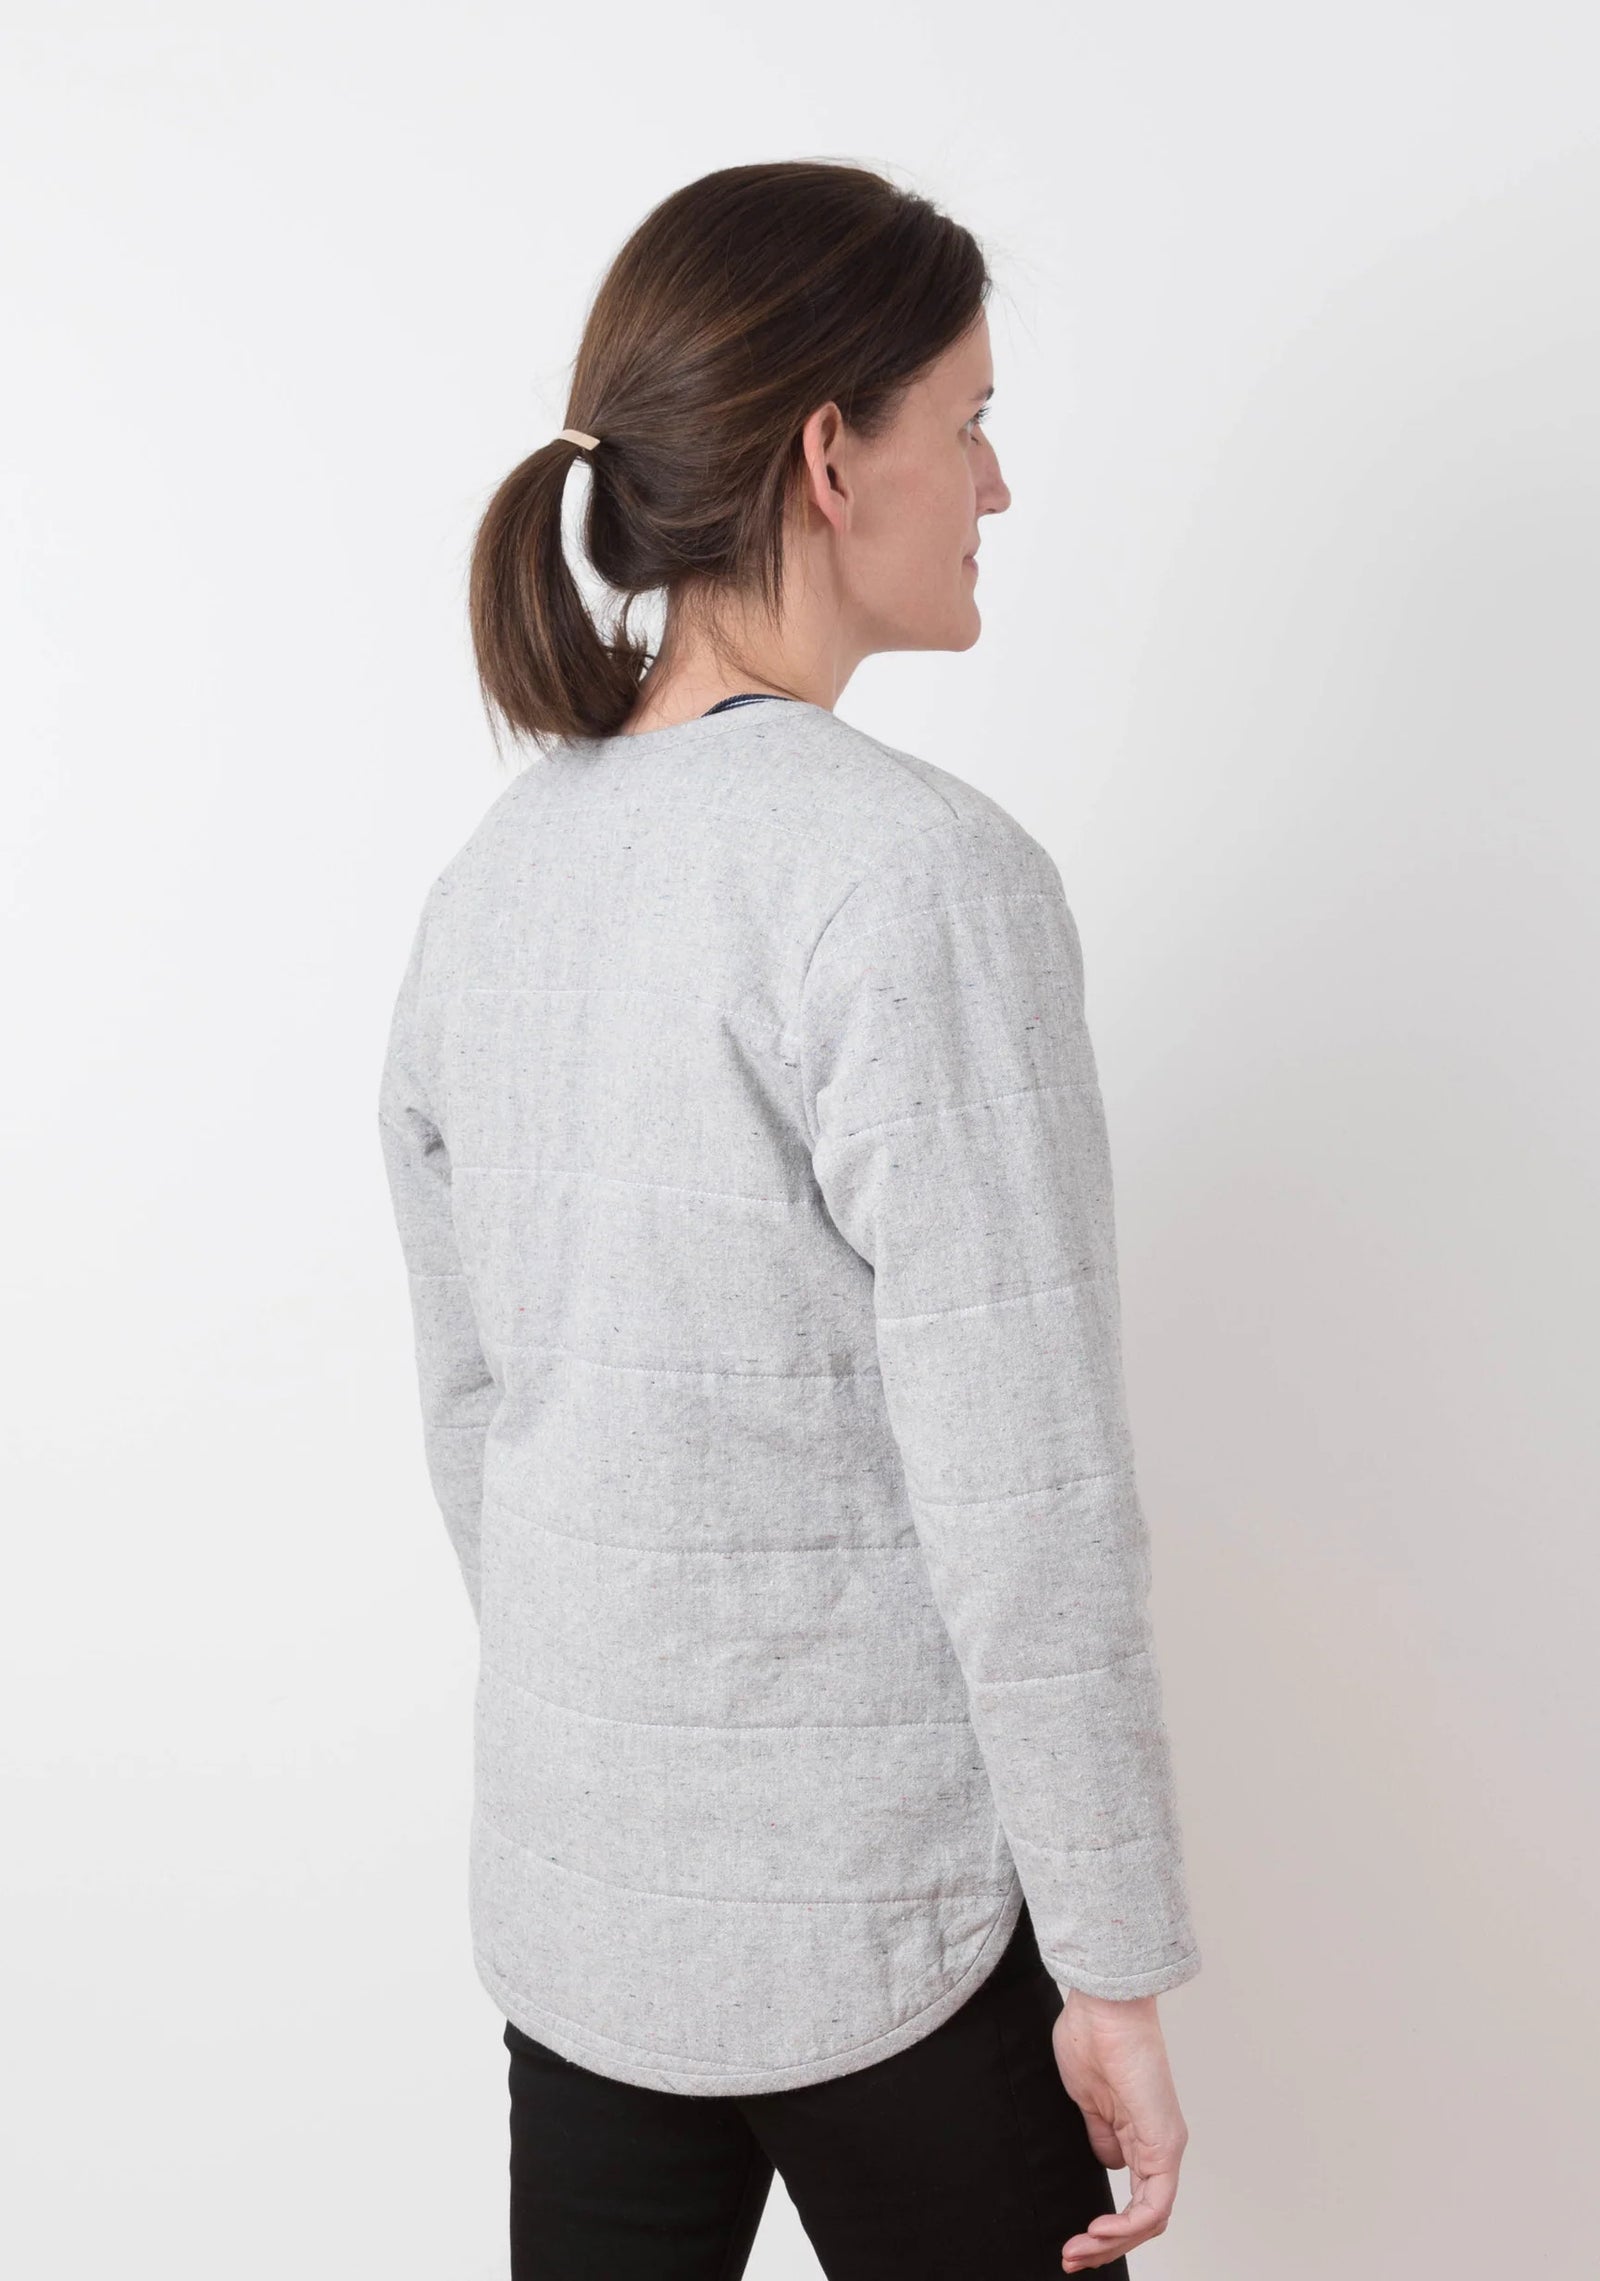 Tamarack Jacket a Grainline Studio Sewing Pattern – Northwest Yarns